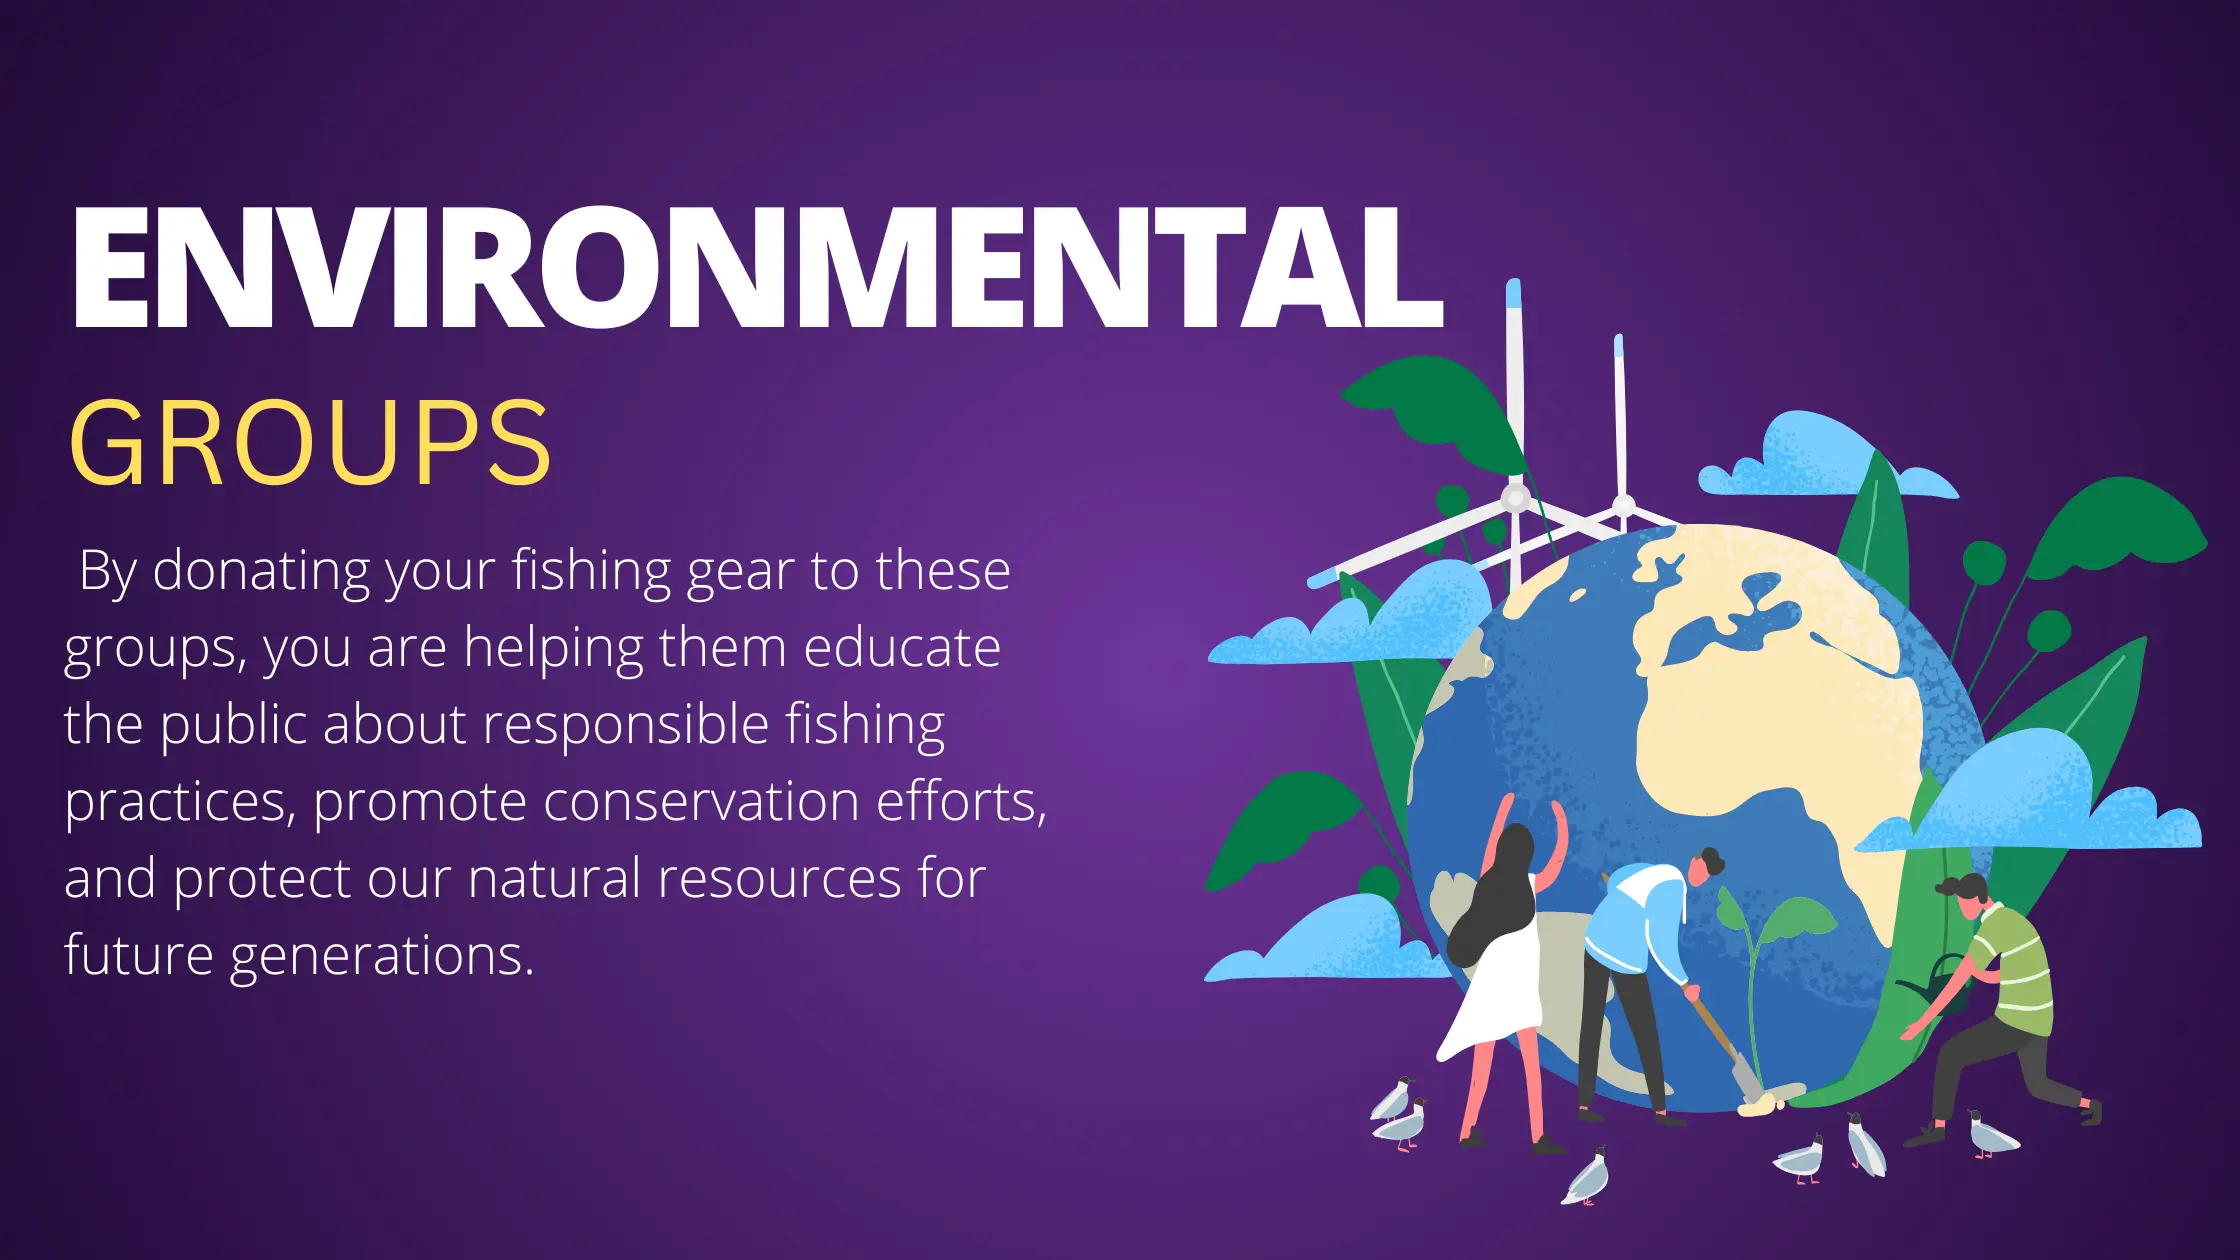 Where To Donate Fishing Equipment?4) Environmental Groups